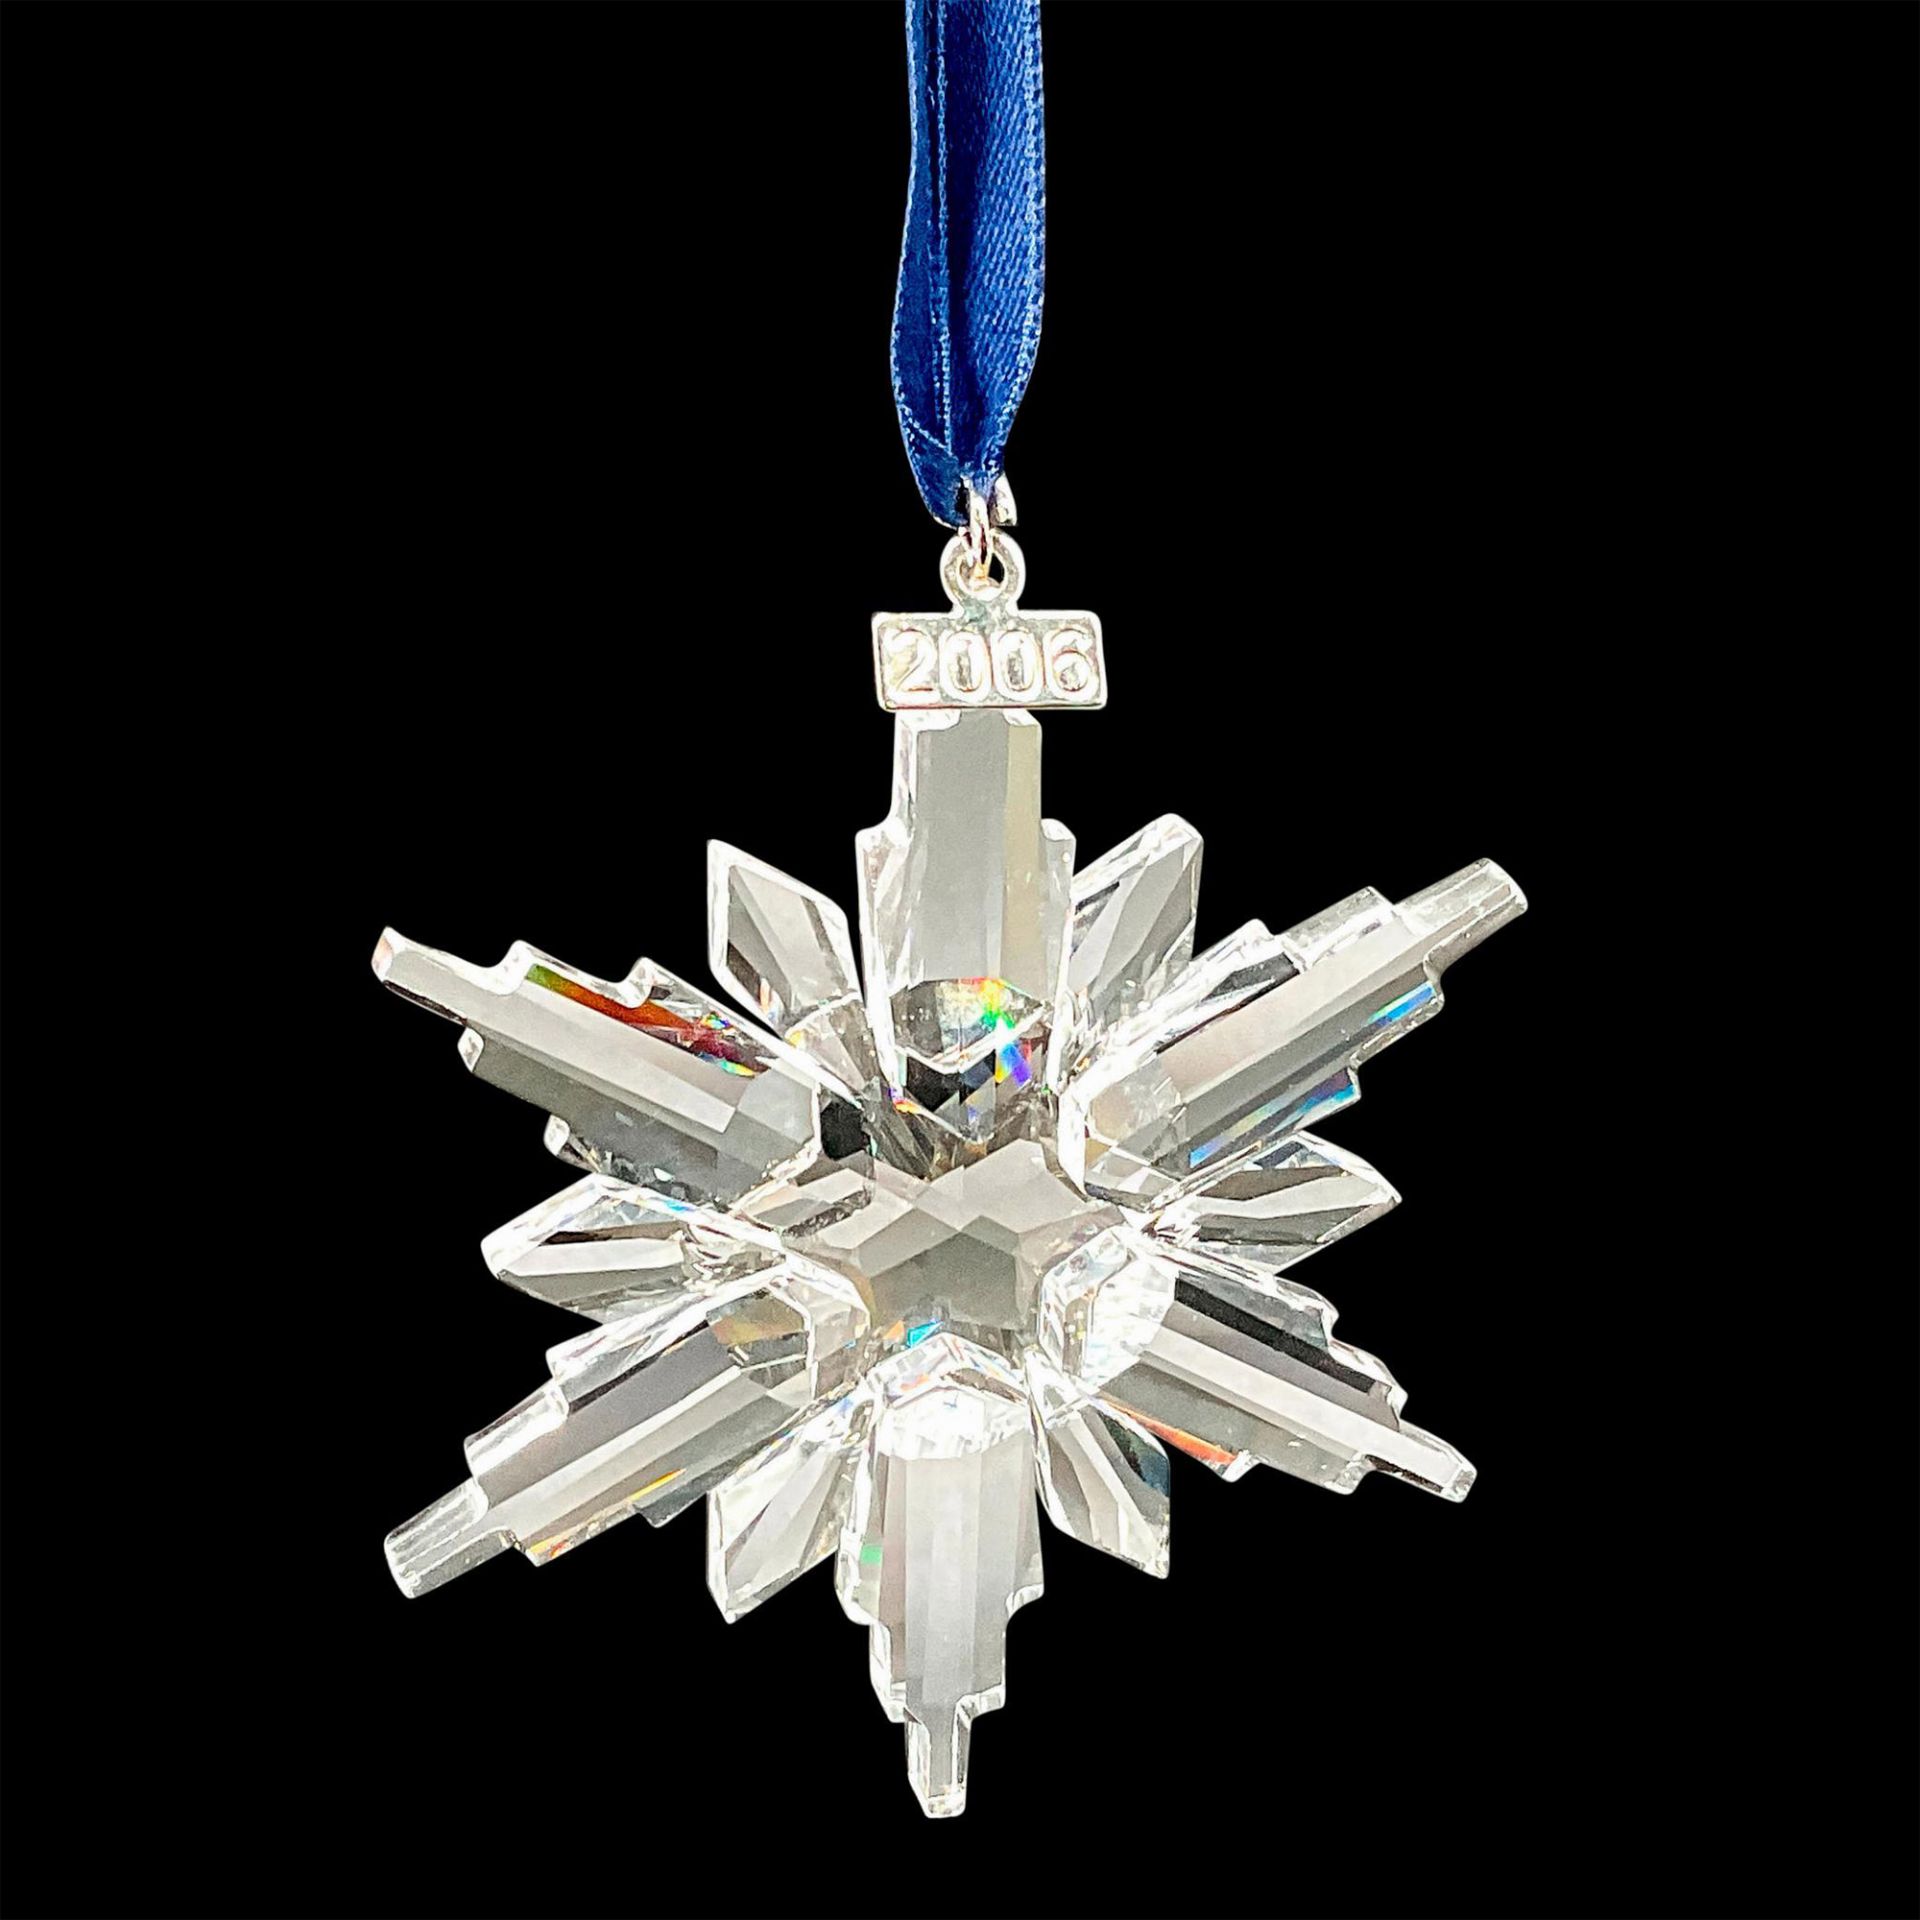 Swarovski Crystal Ornament, Christmas Star with Stand - Image 2 of 4